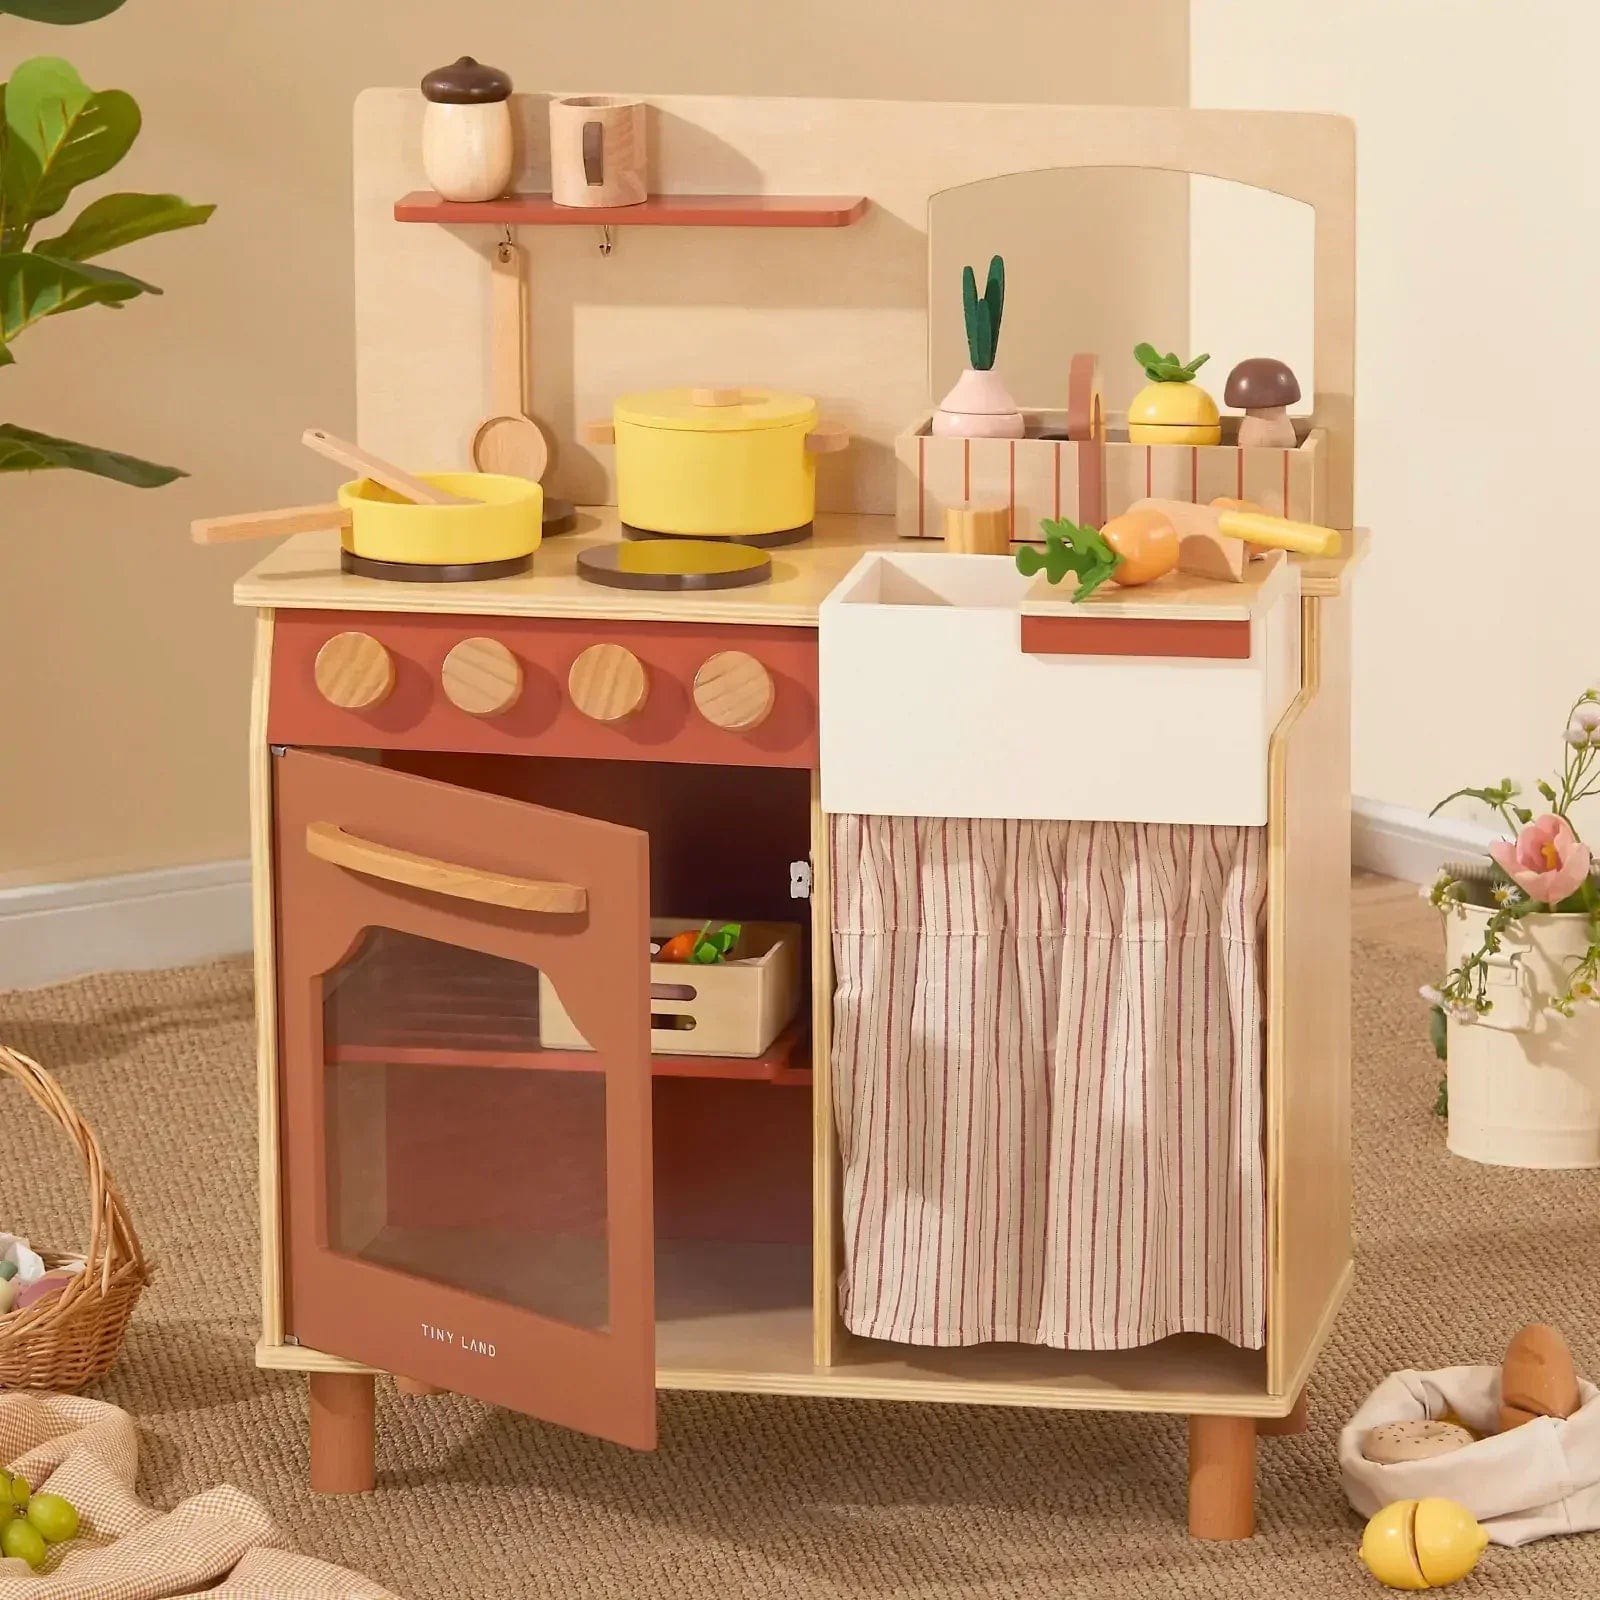 Tiny Land Toy Tiny Land® Modern & Versatile Wooden Kids Play Kitchen